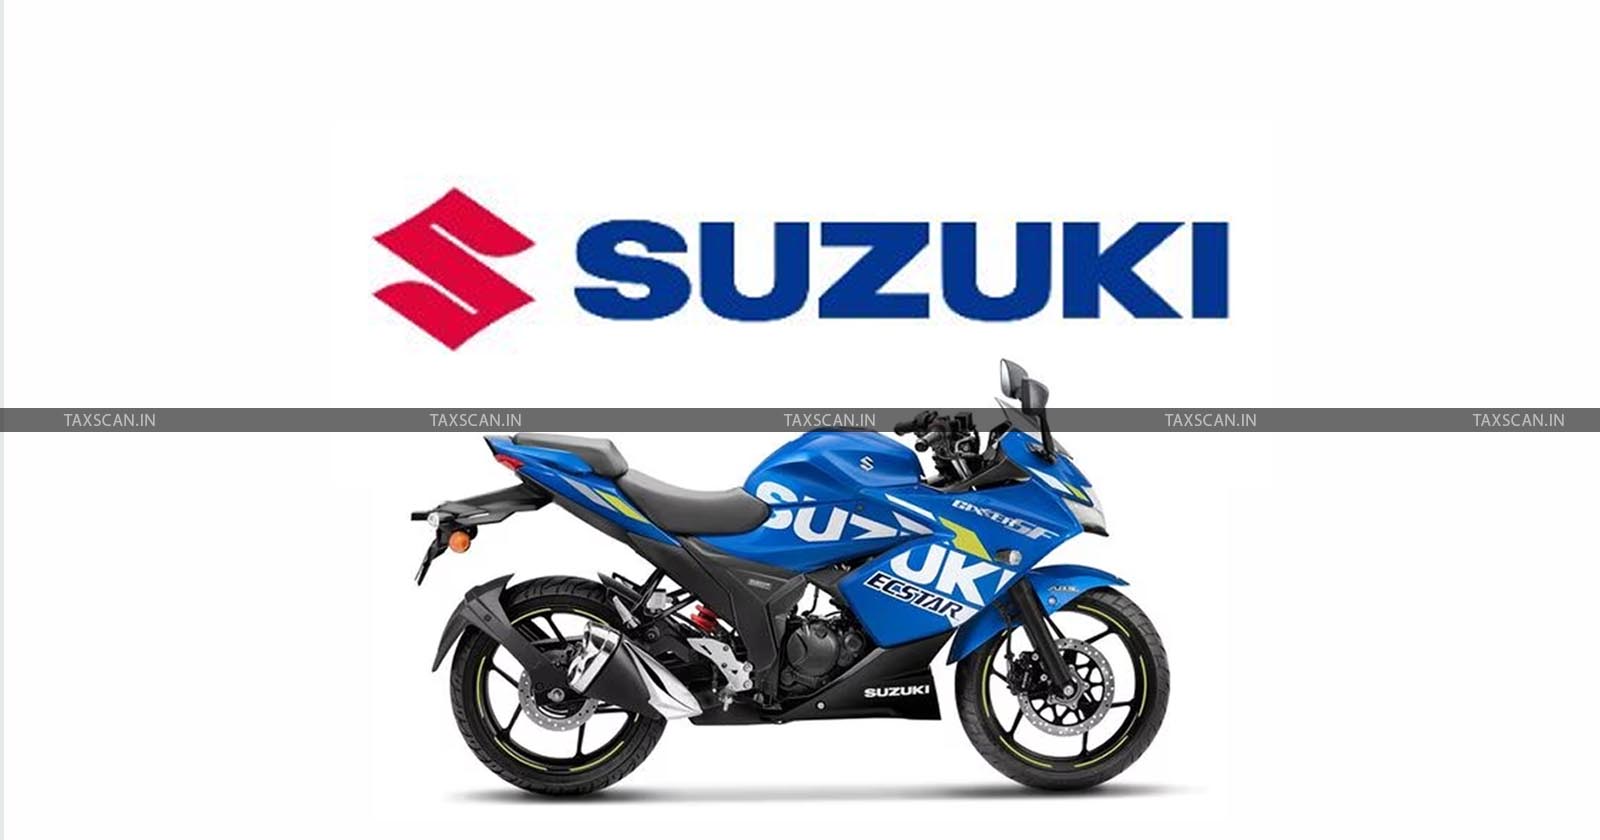 CESTAT - Excise Duty - CESTAT Quashes Excise Duty - Suzuki Motorcycle -TAXSCAN